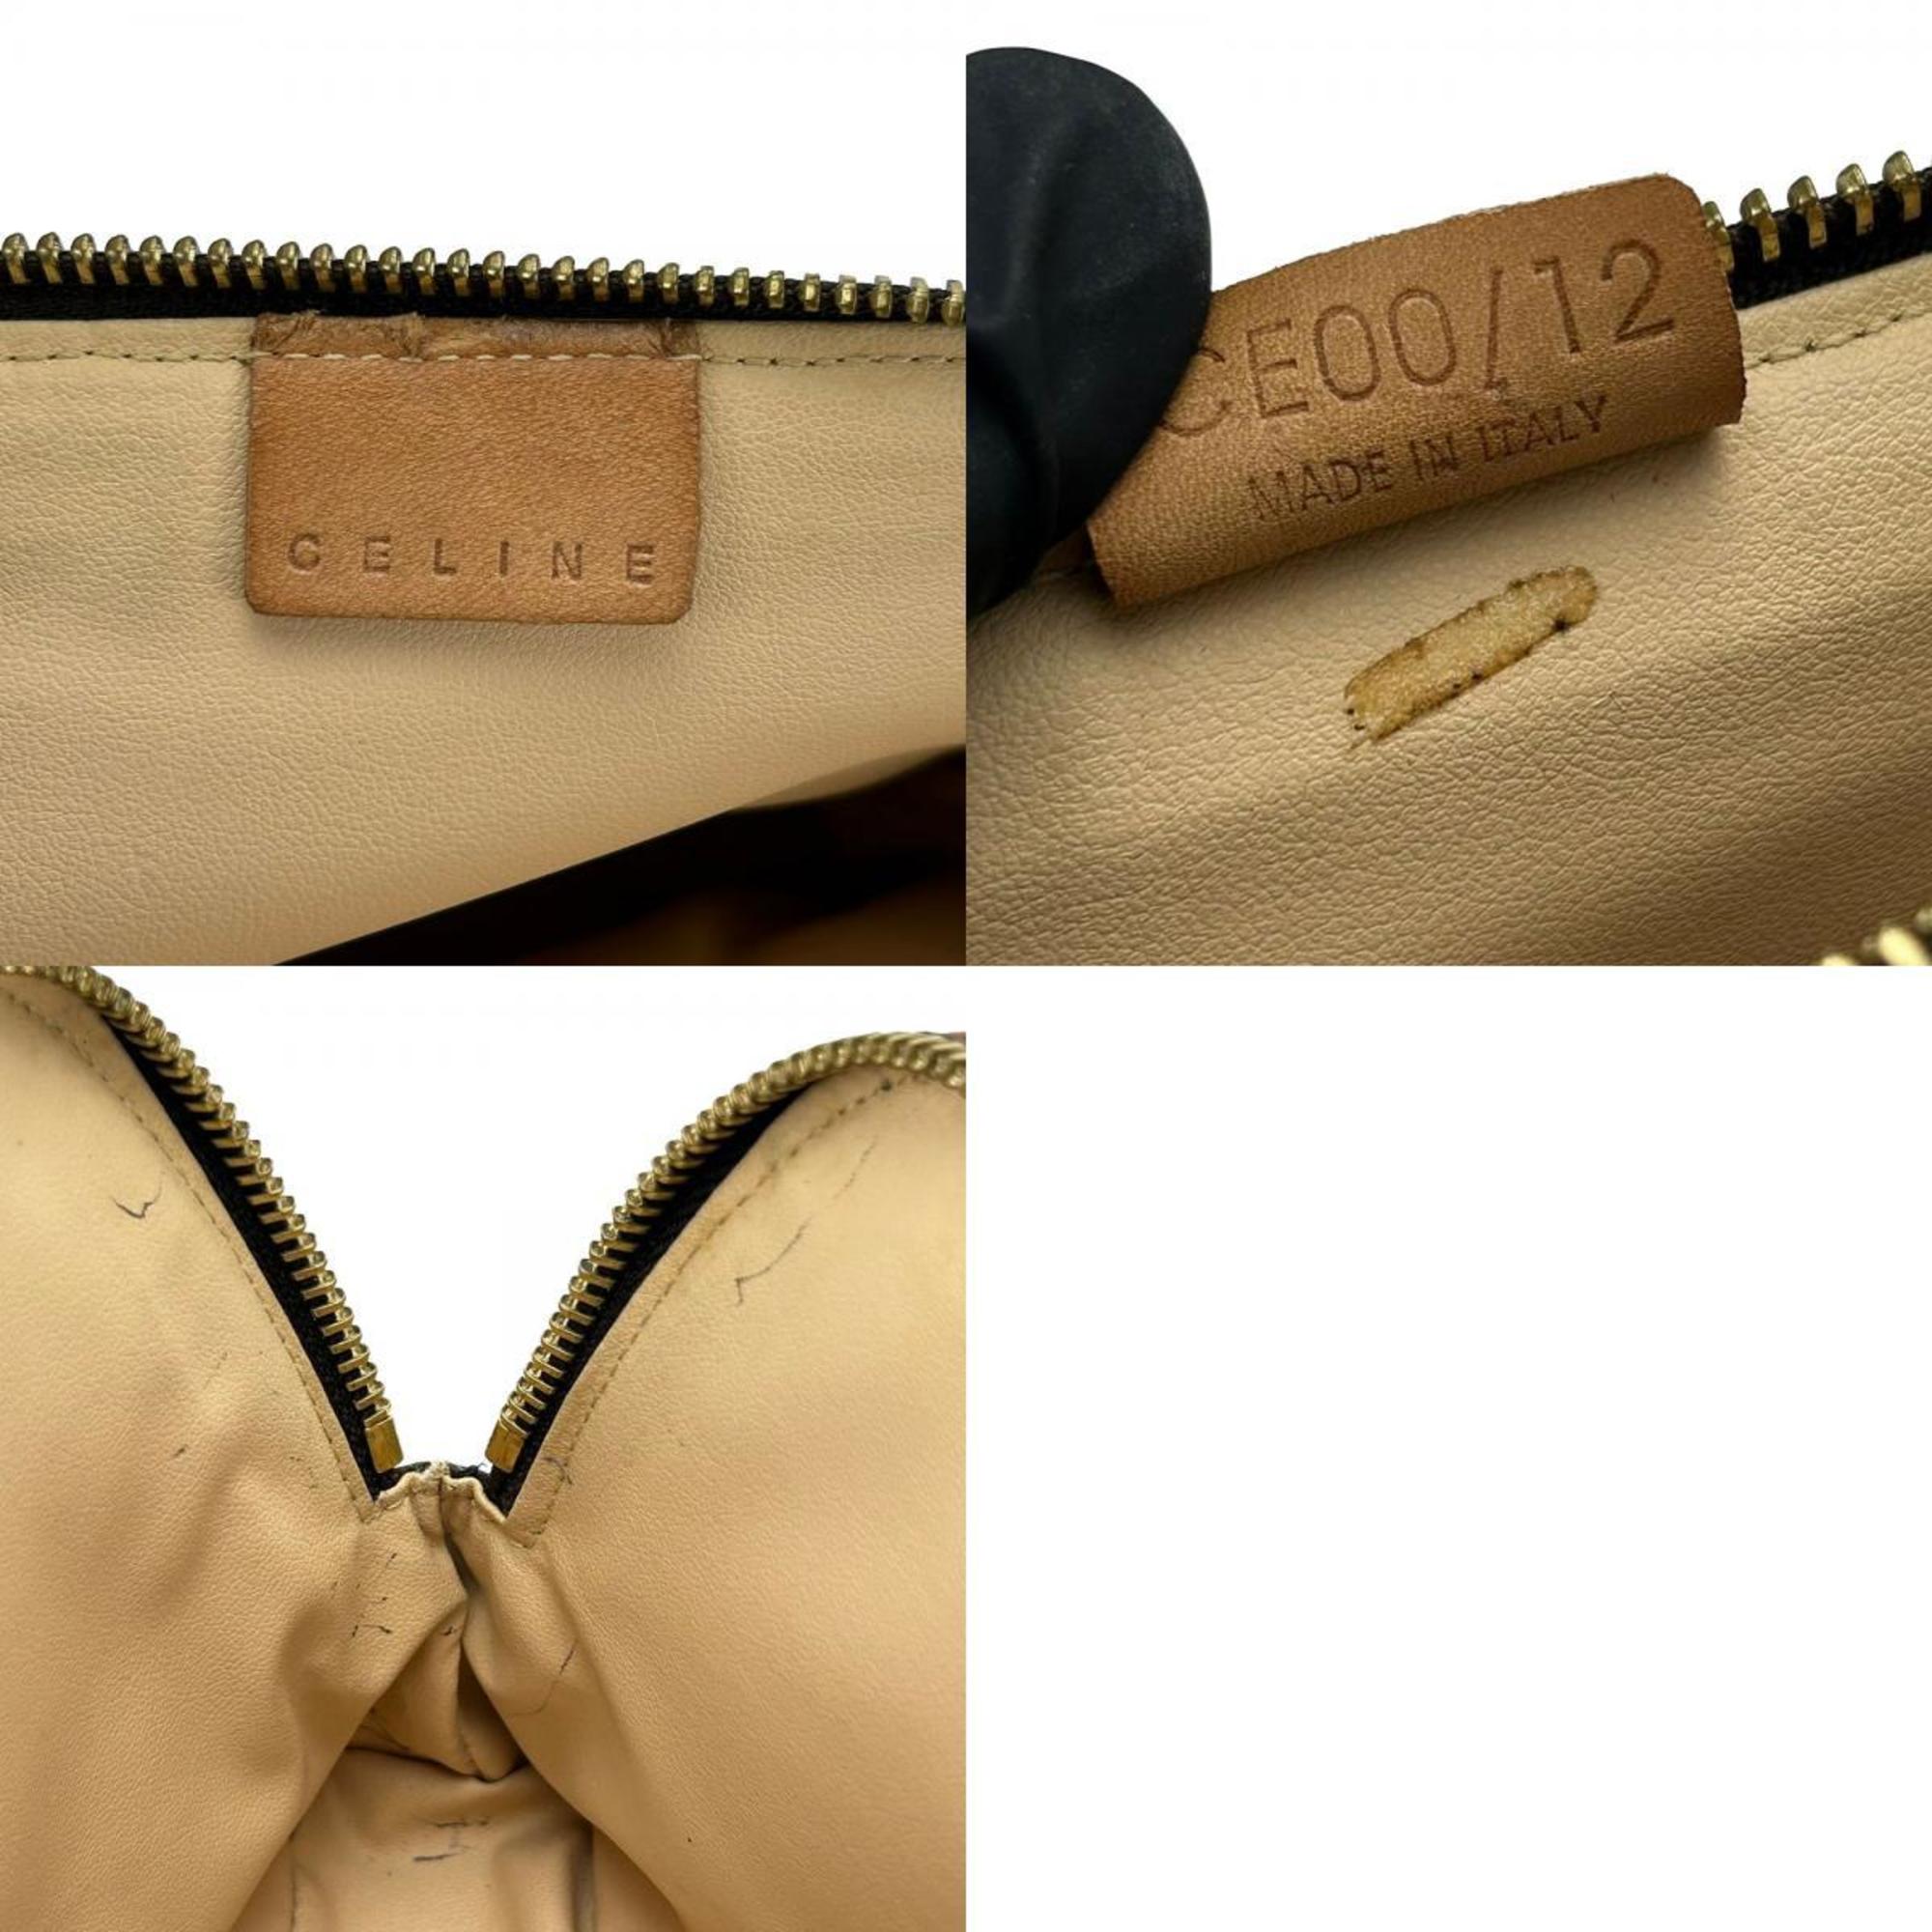 Celine pouch, macadam leather, brown, accessories, women's, CELINE